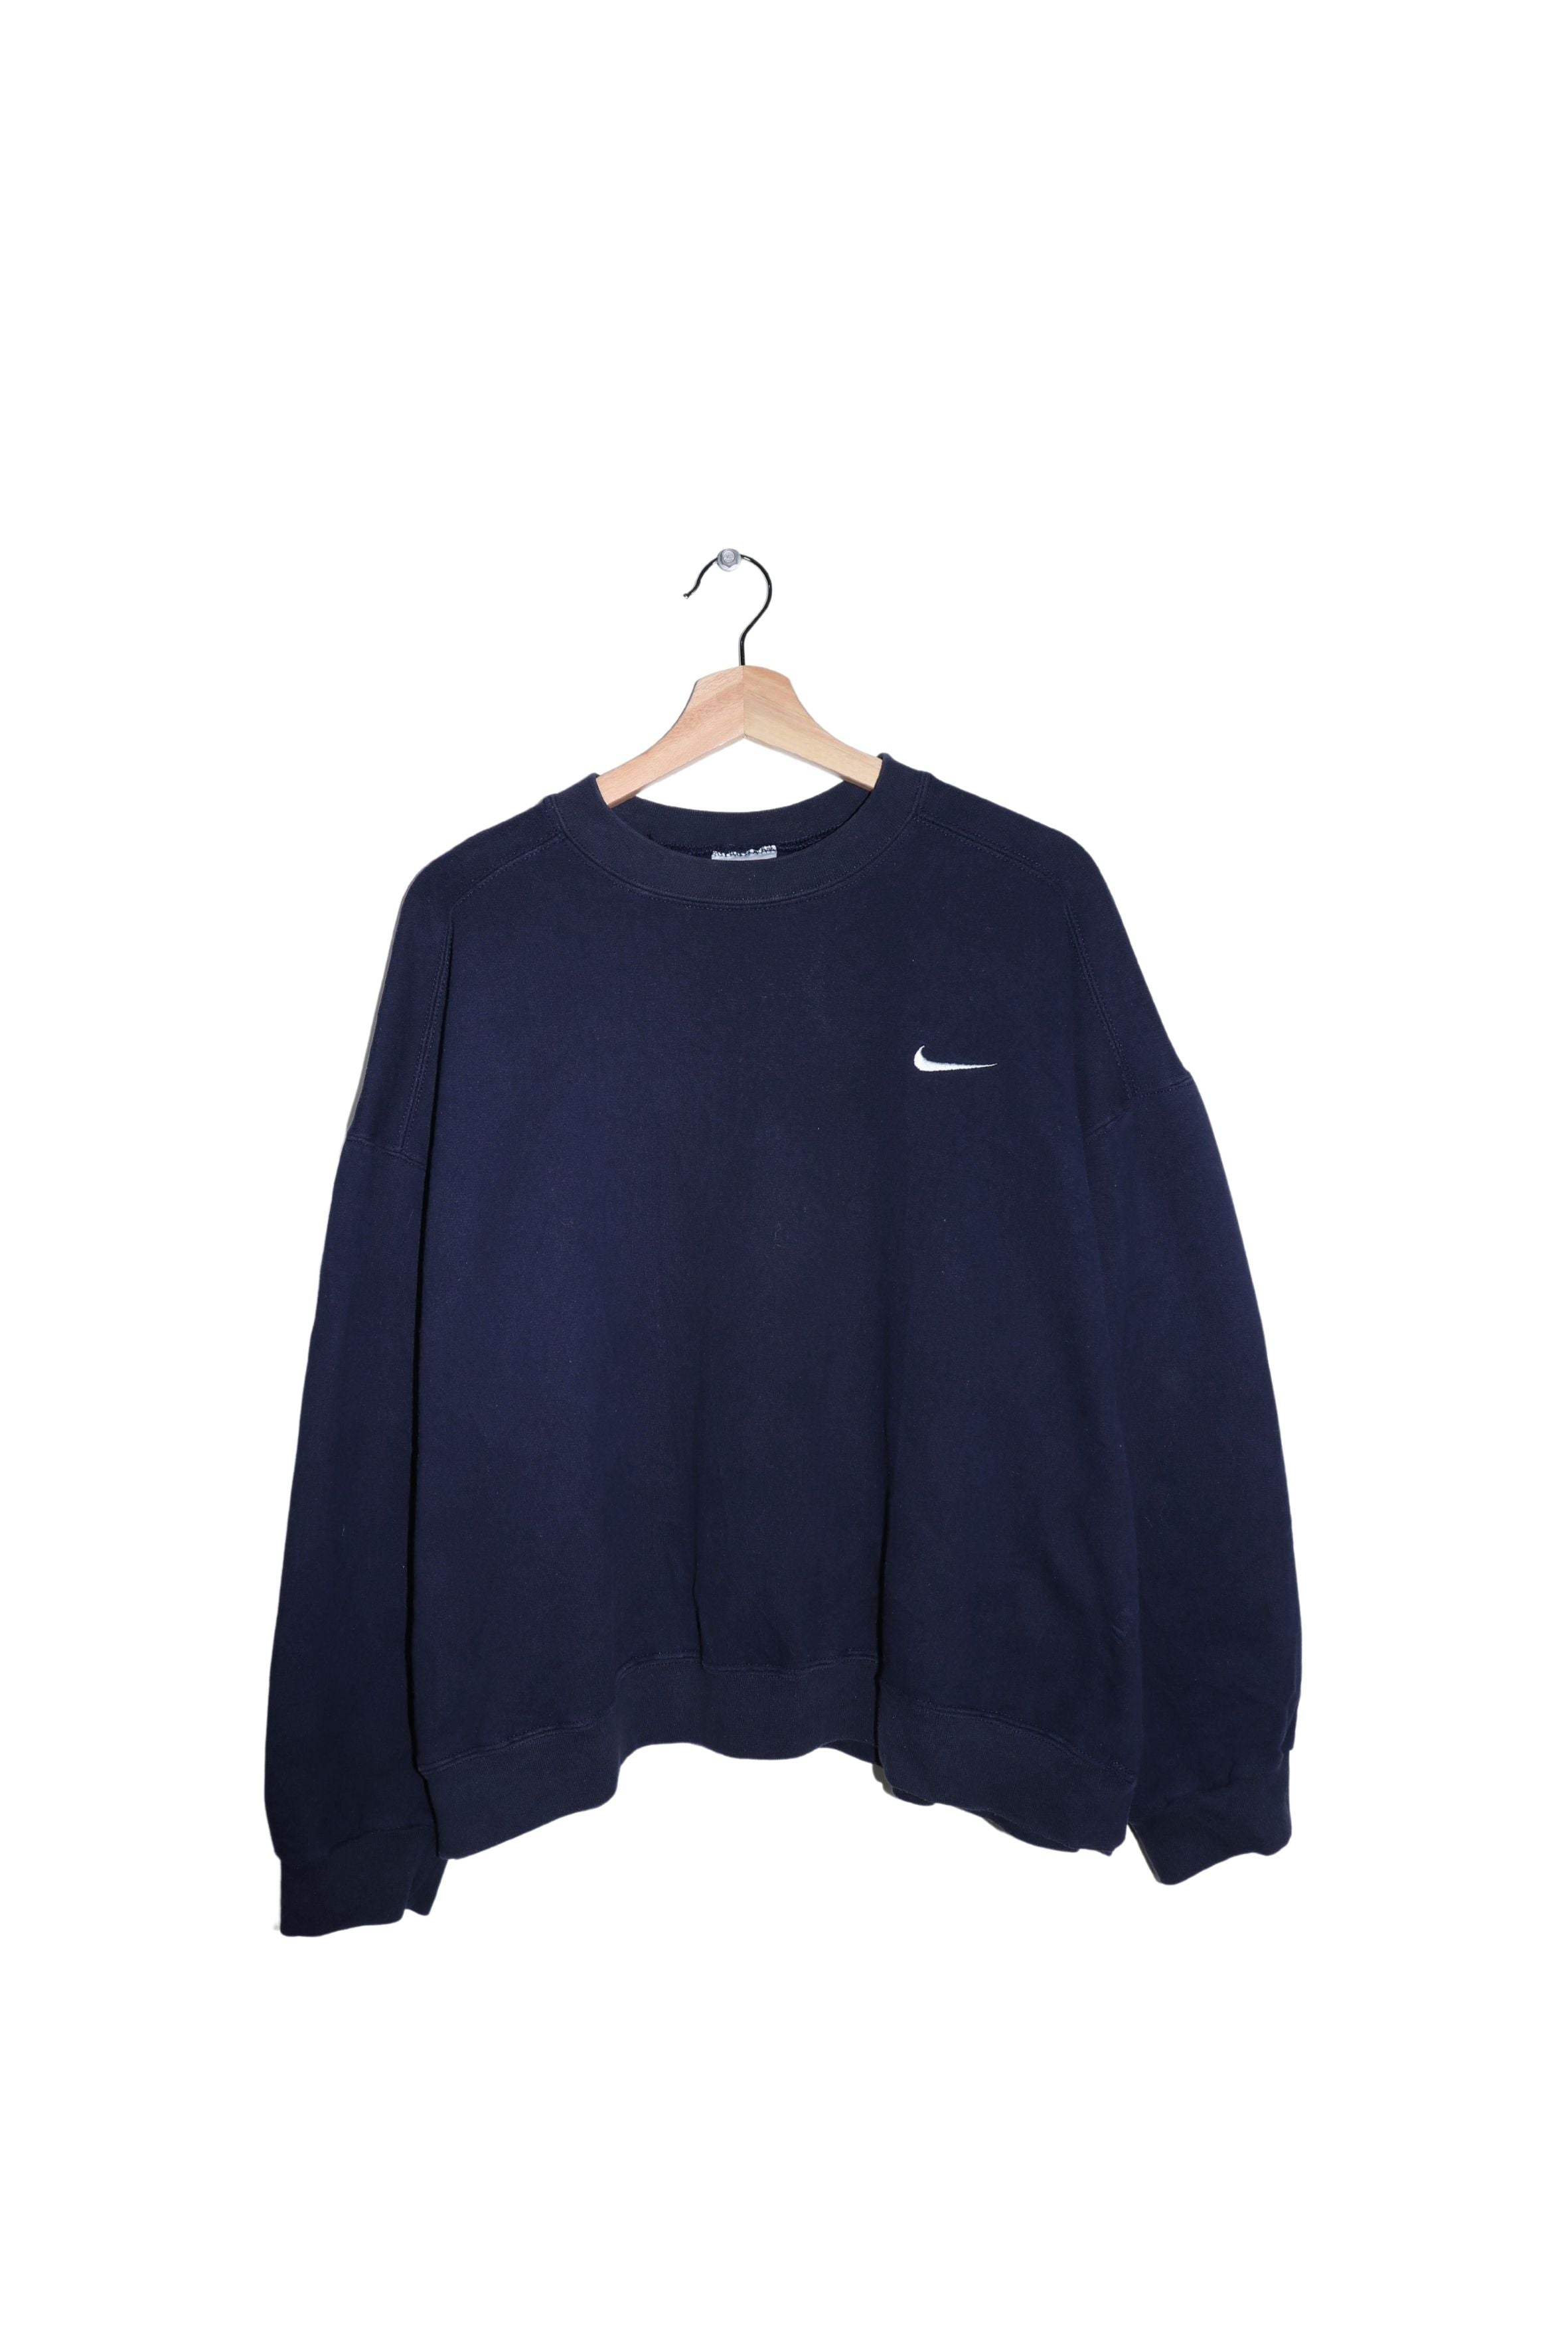 Nike 90s Navy Vintage Sweatshirt (L fits a cropped L / Boxy M)